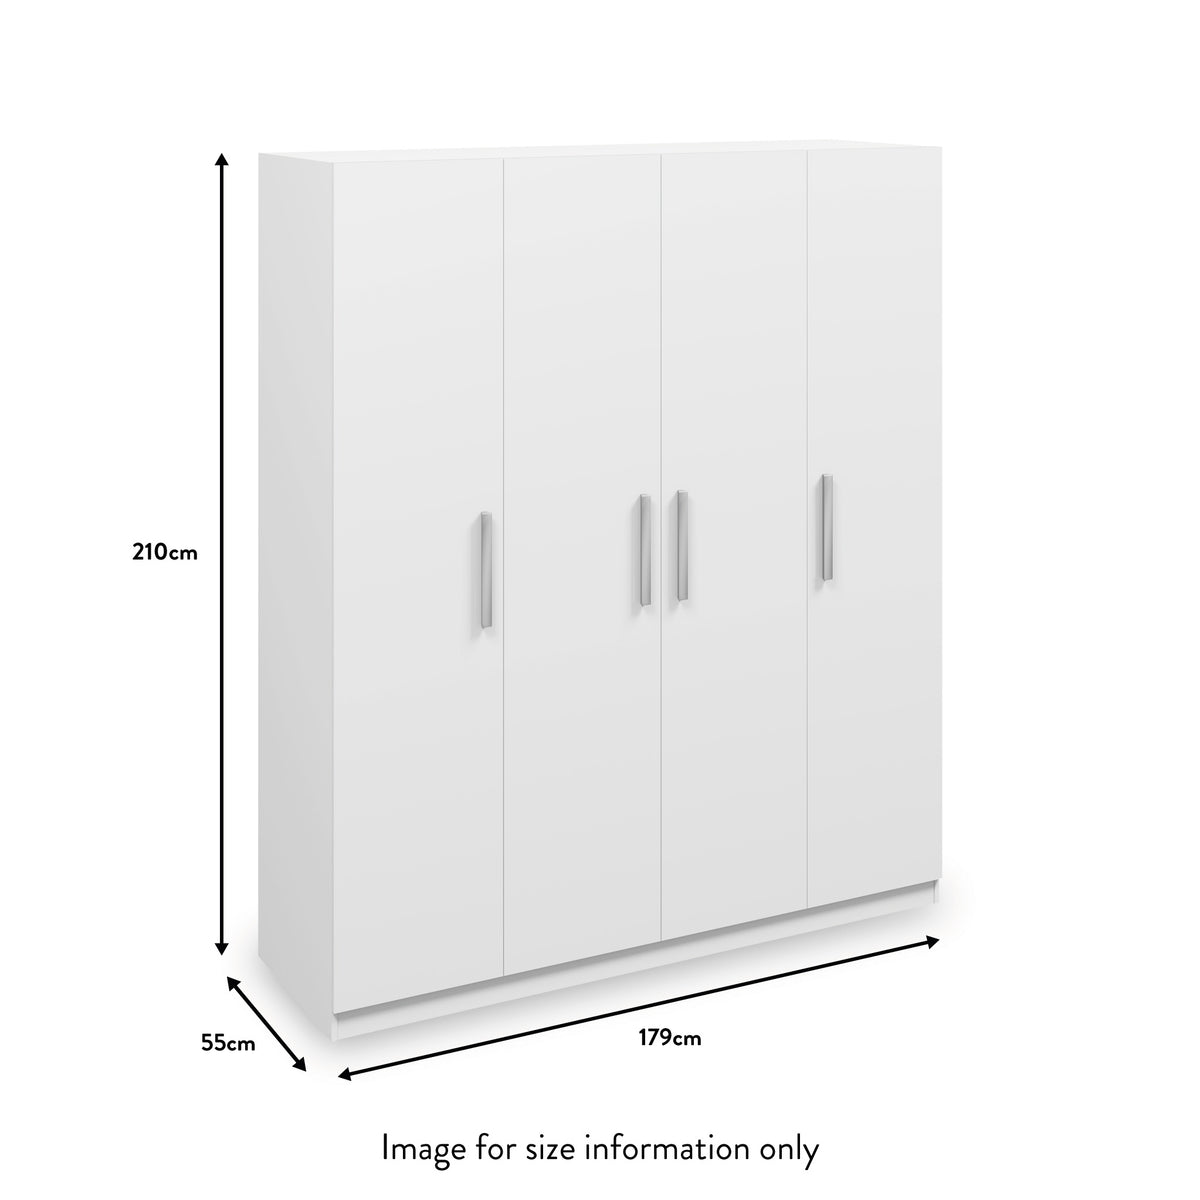 Meribel White 4 Door Wardrobe dimensions